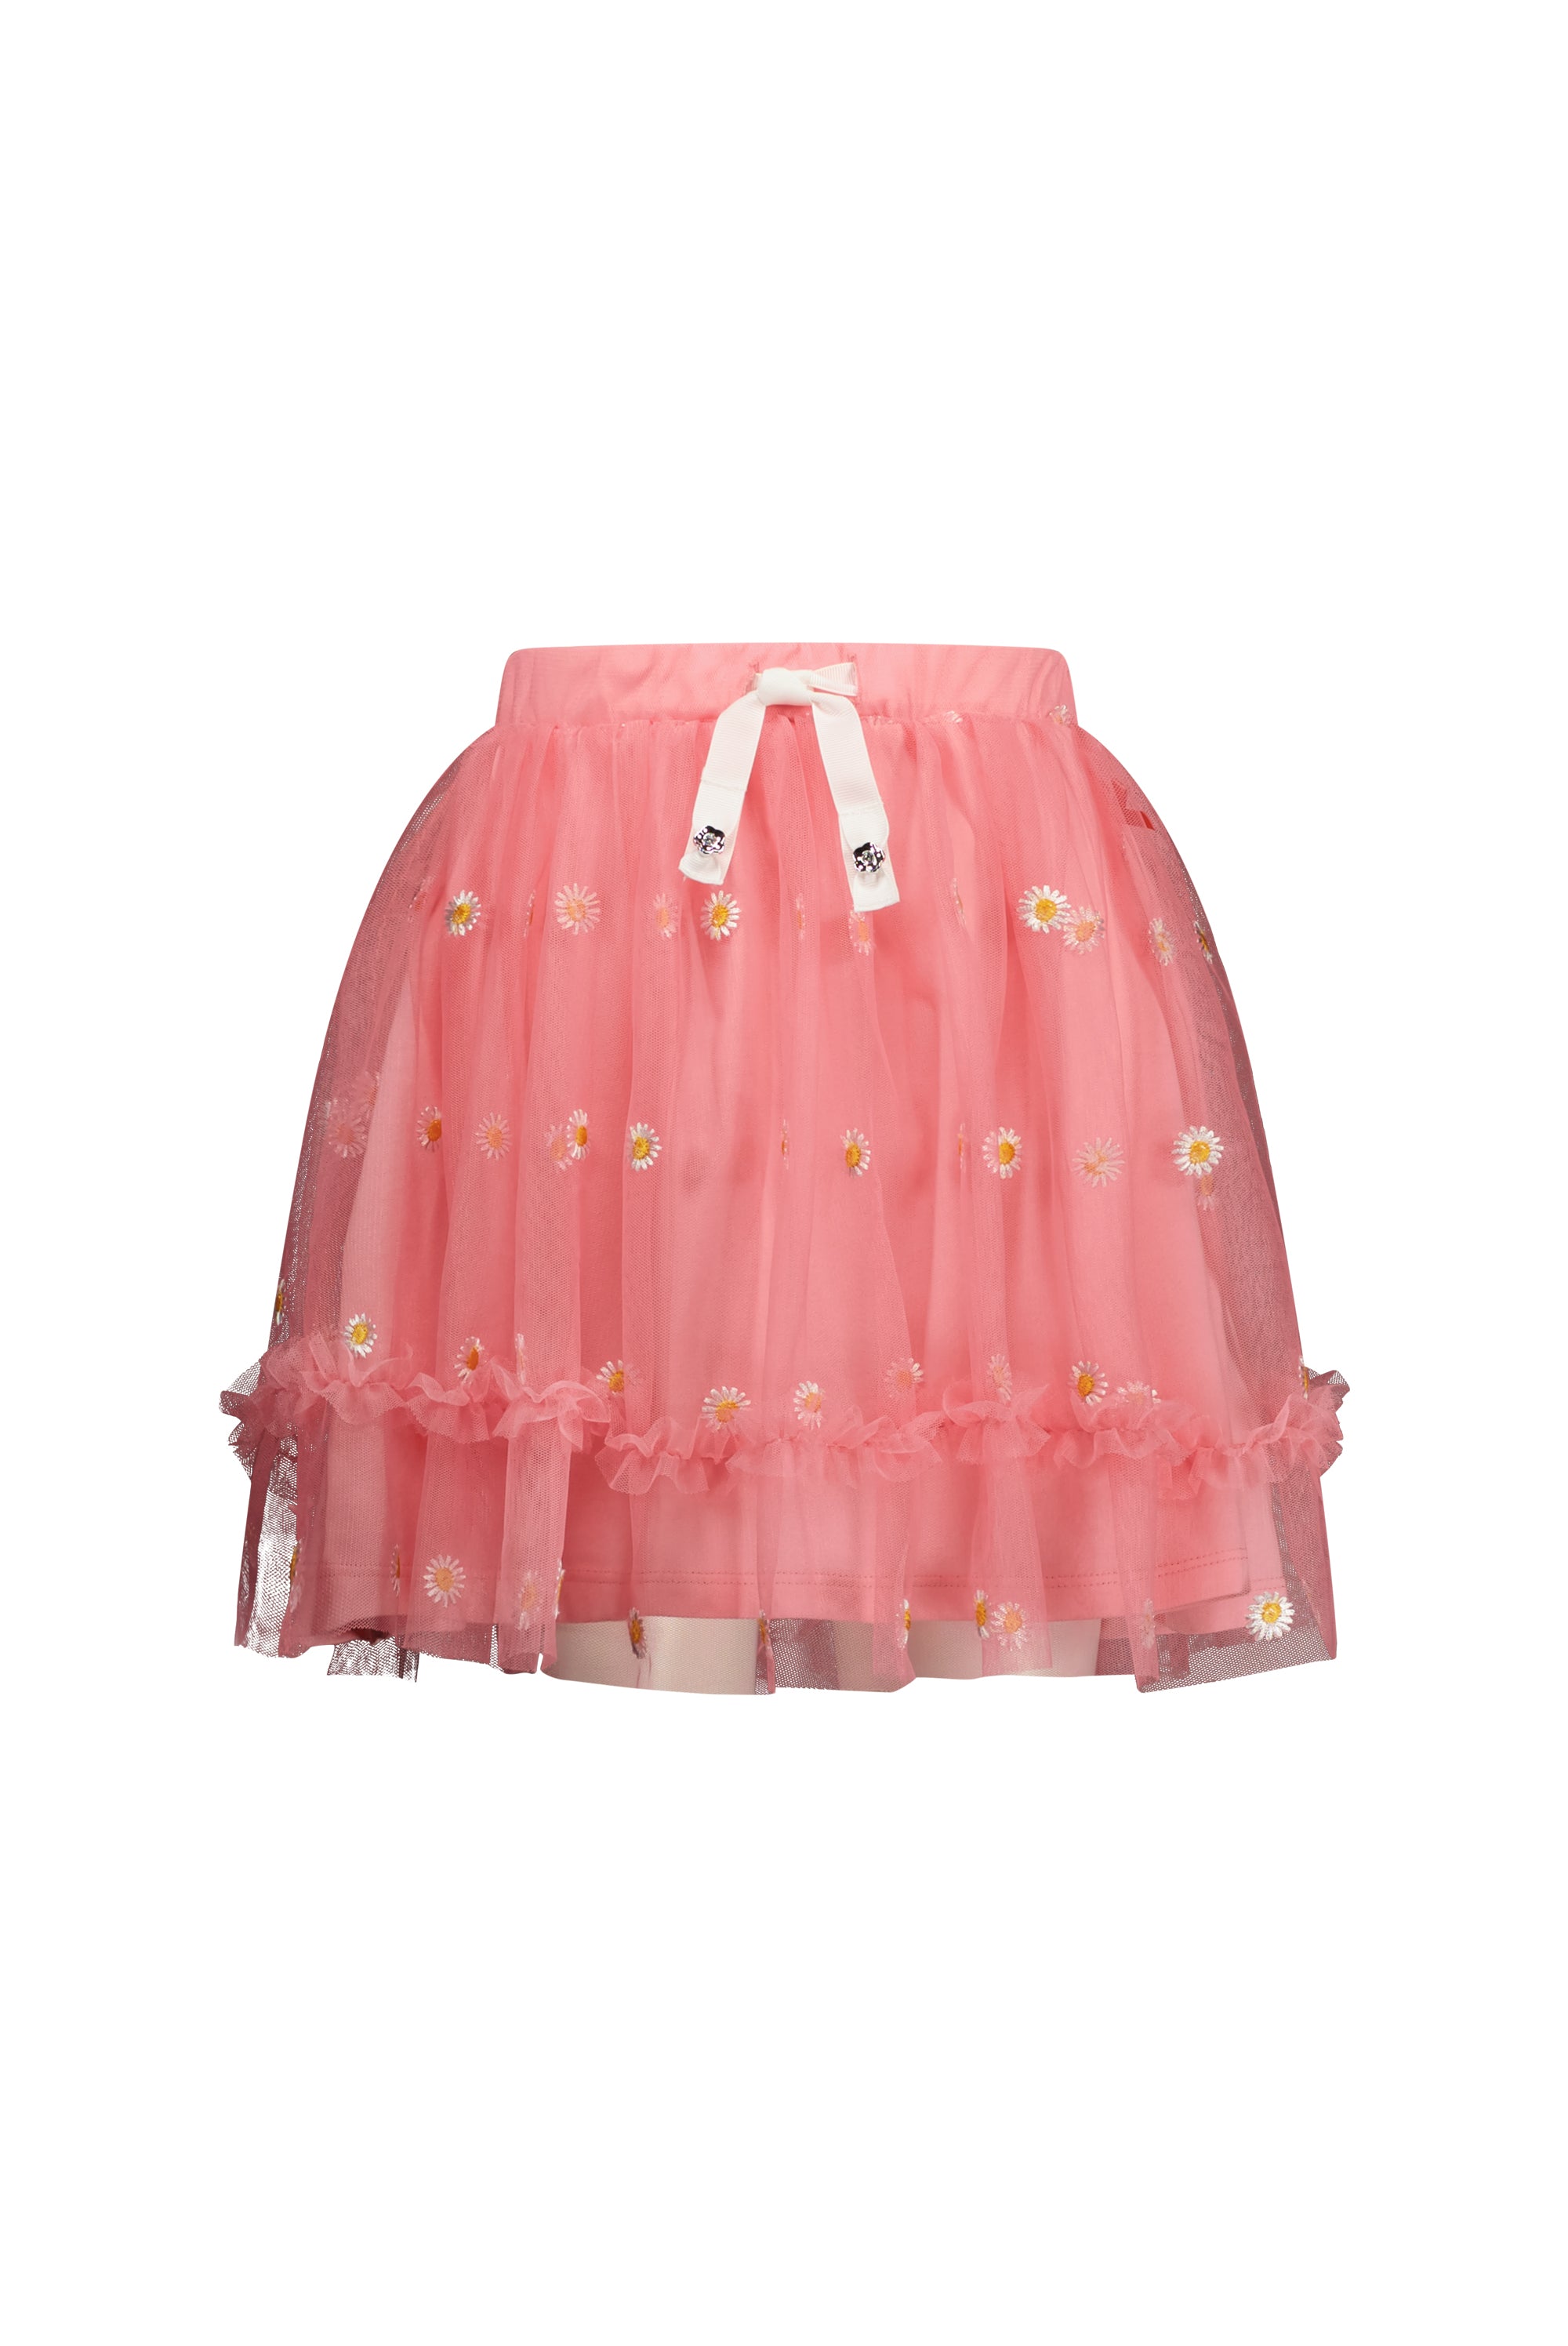 TAYLORA daisy embroidery skirt